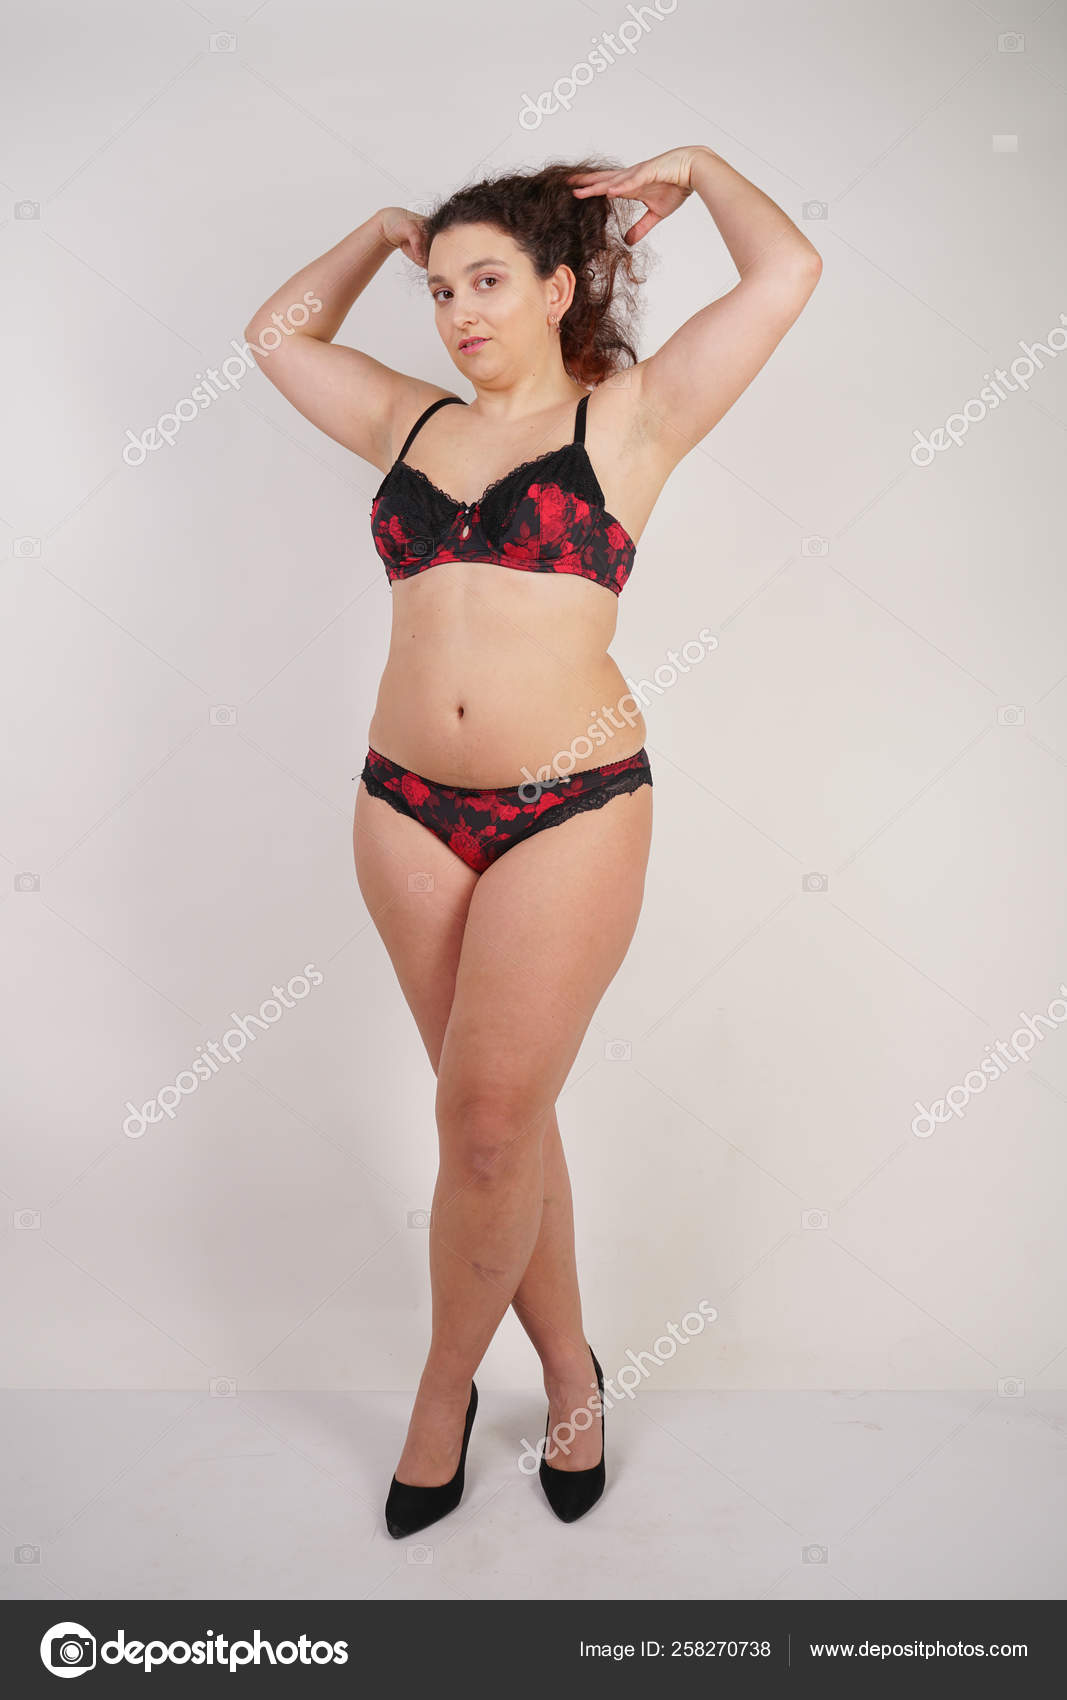 Feminine Chubby Woman Size Body Black Lingerie Posing White ...